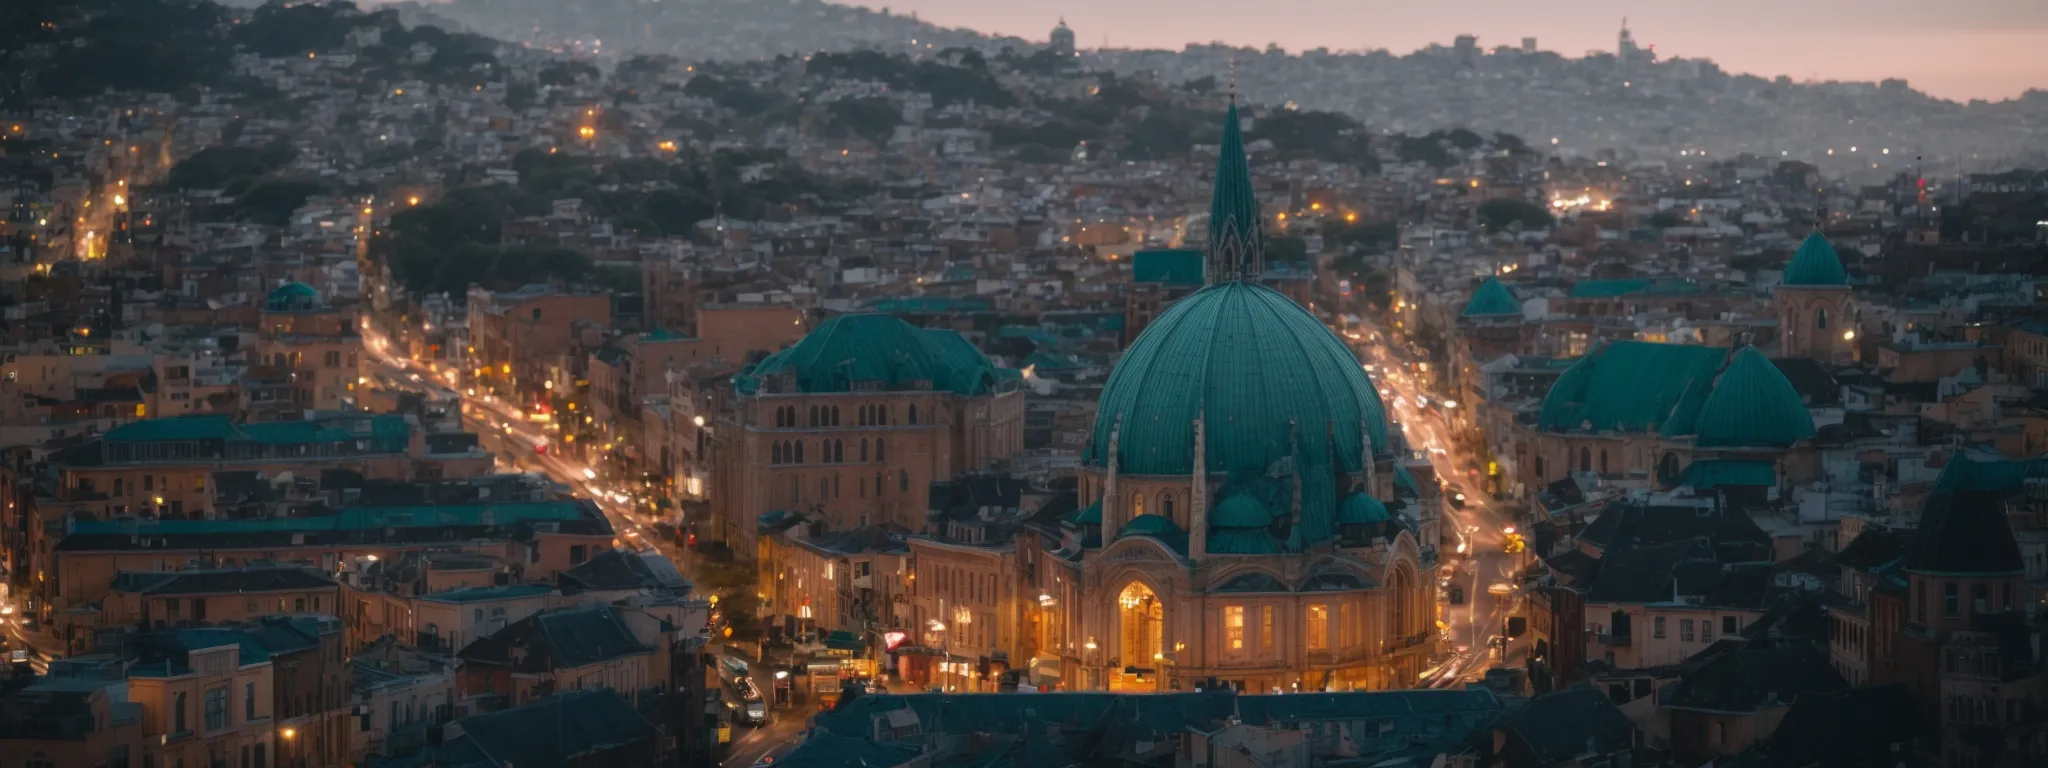 a camera focuses on a vibrant cityscape highlighting distinctive local landmarks.